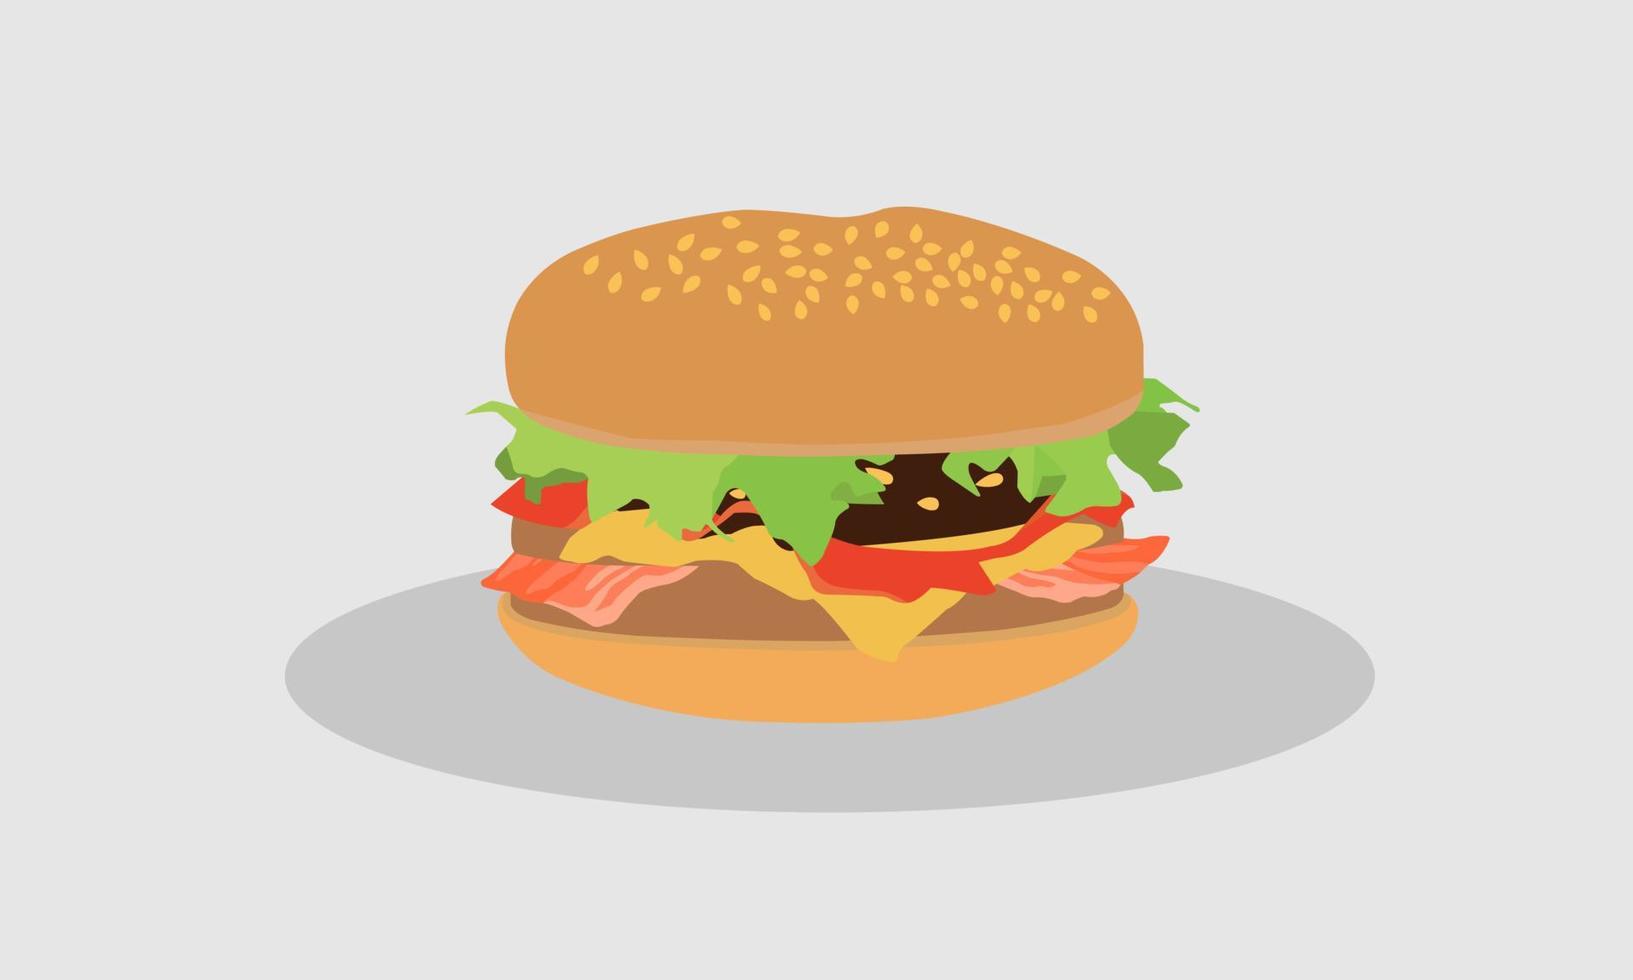 comida rápida deliciosa. clássico cheeseburger americano com alface, queijo, carne e molho. vetor